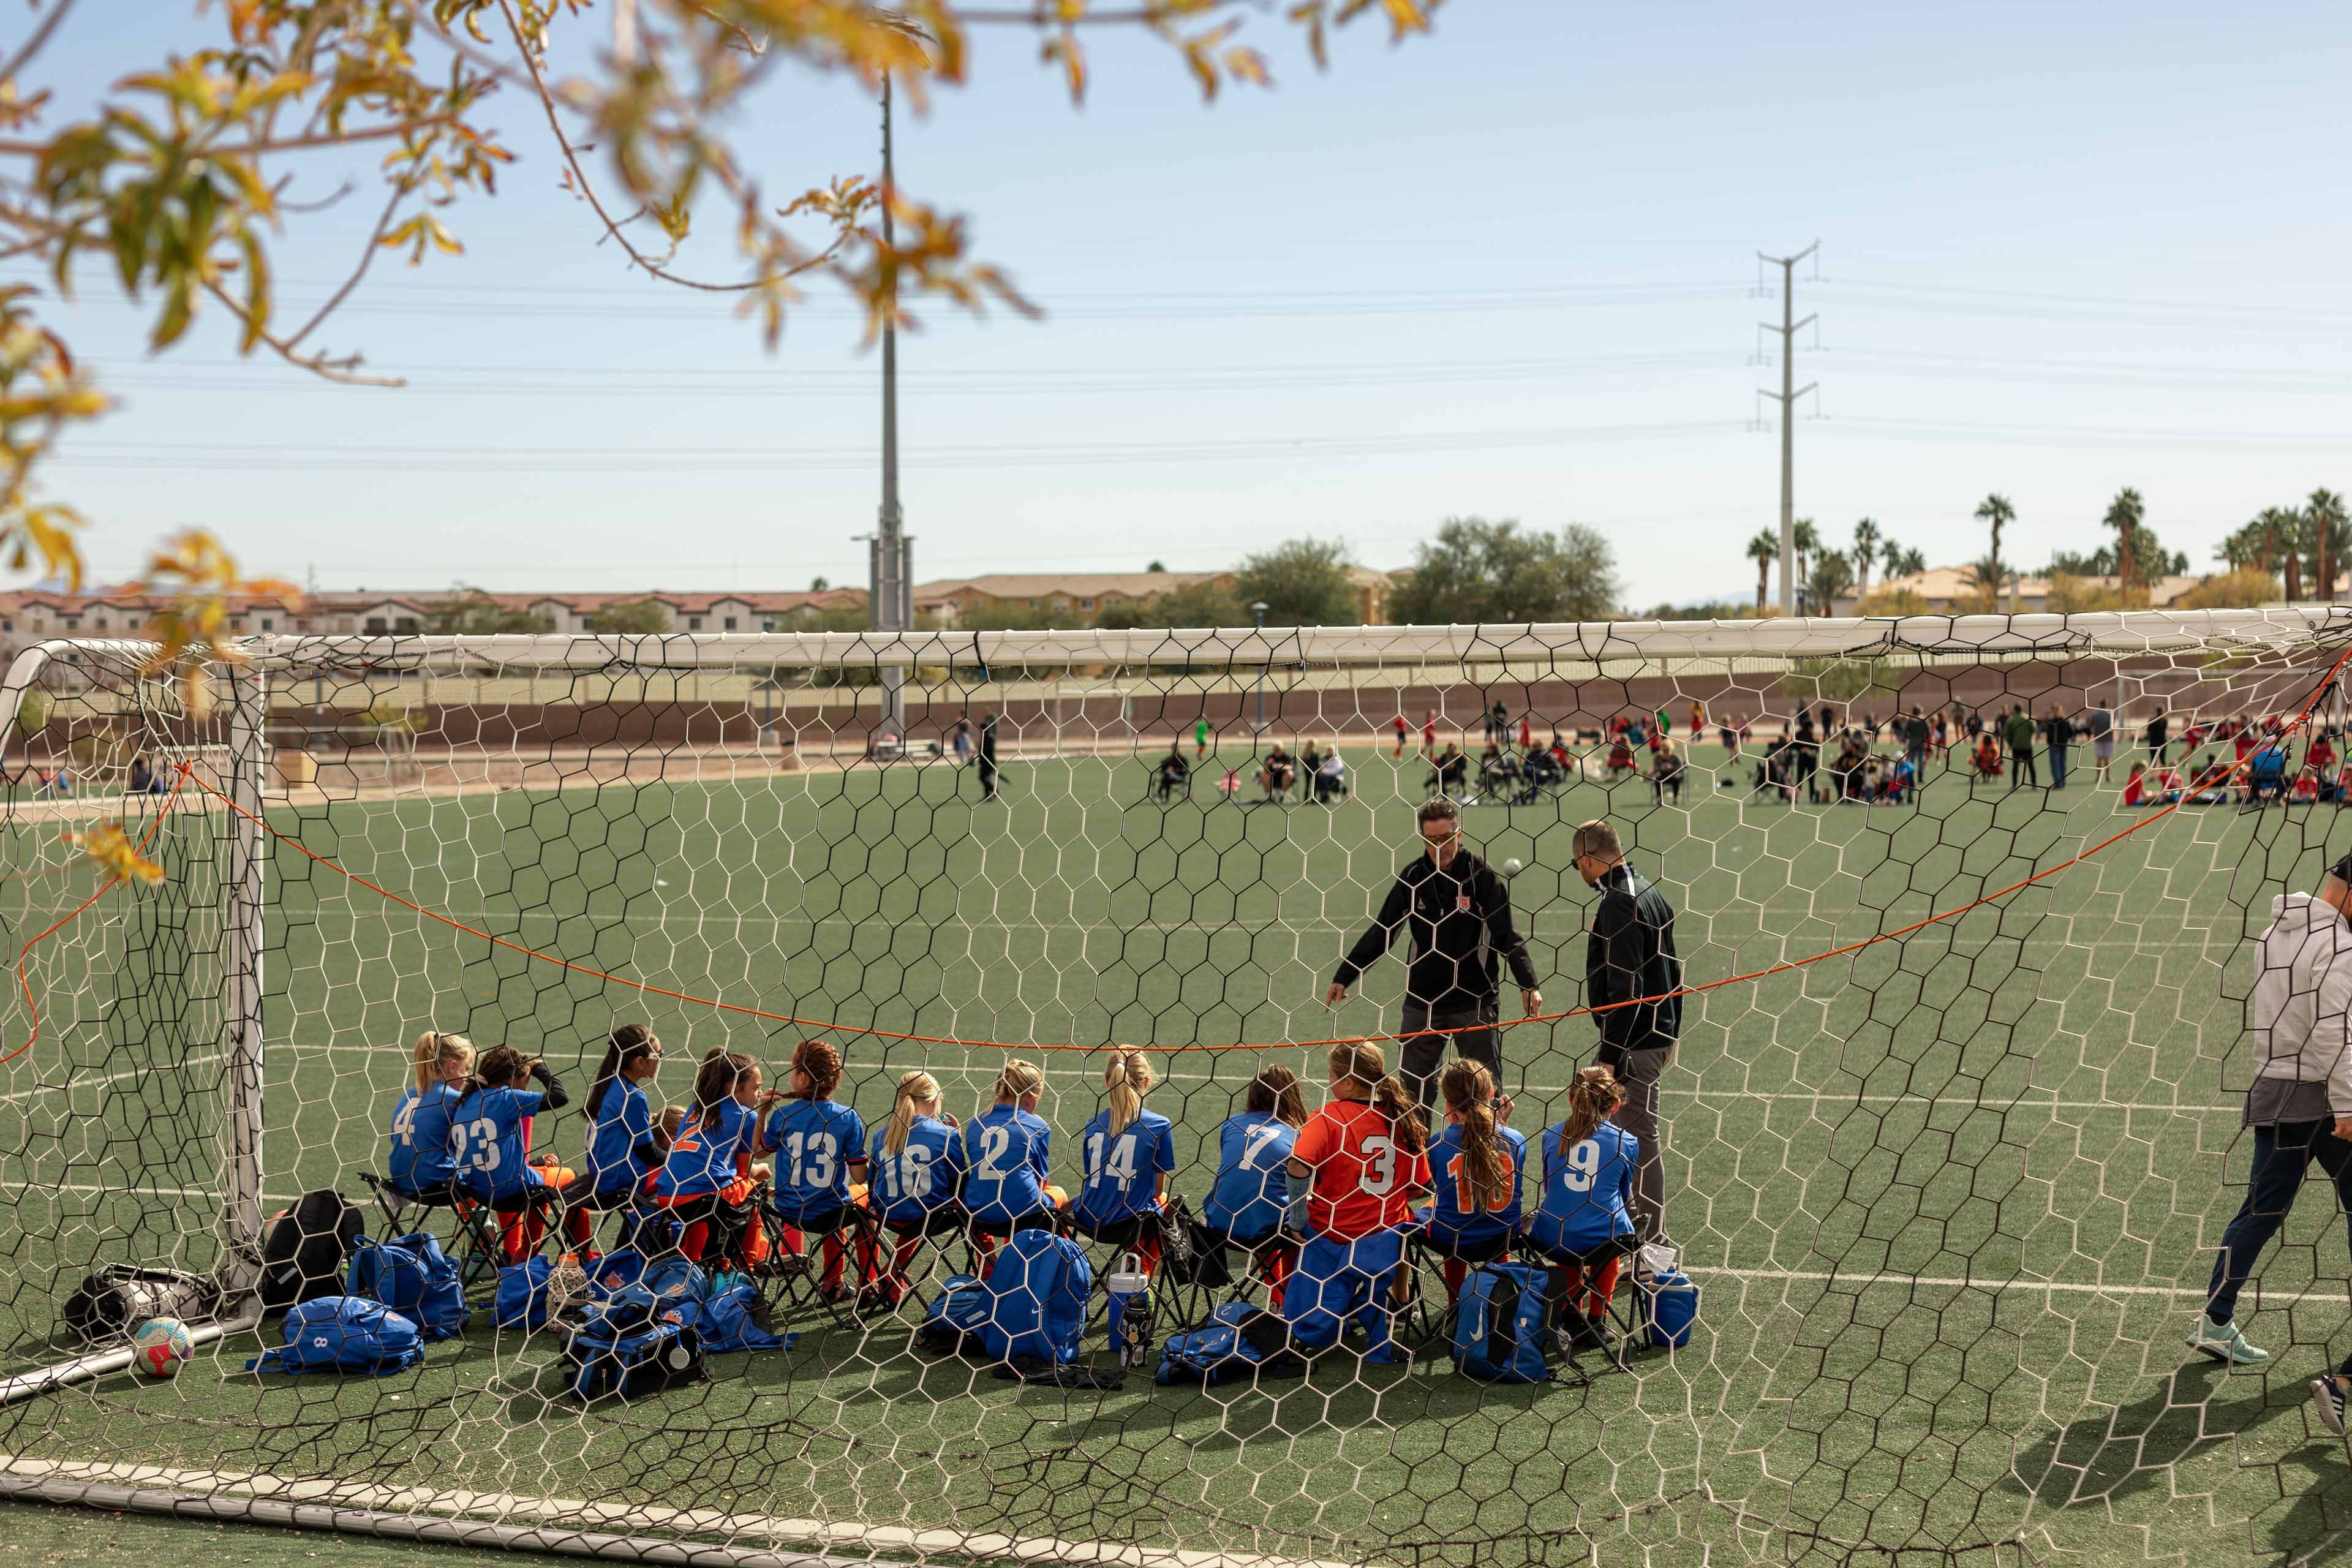 youth soccer team sitting near a goal net